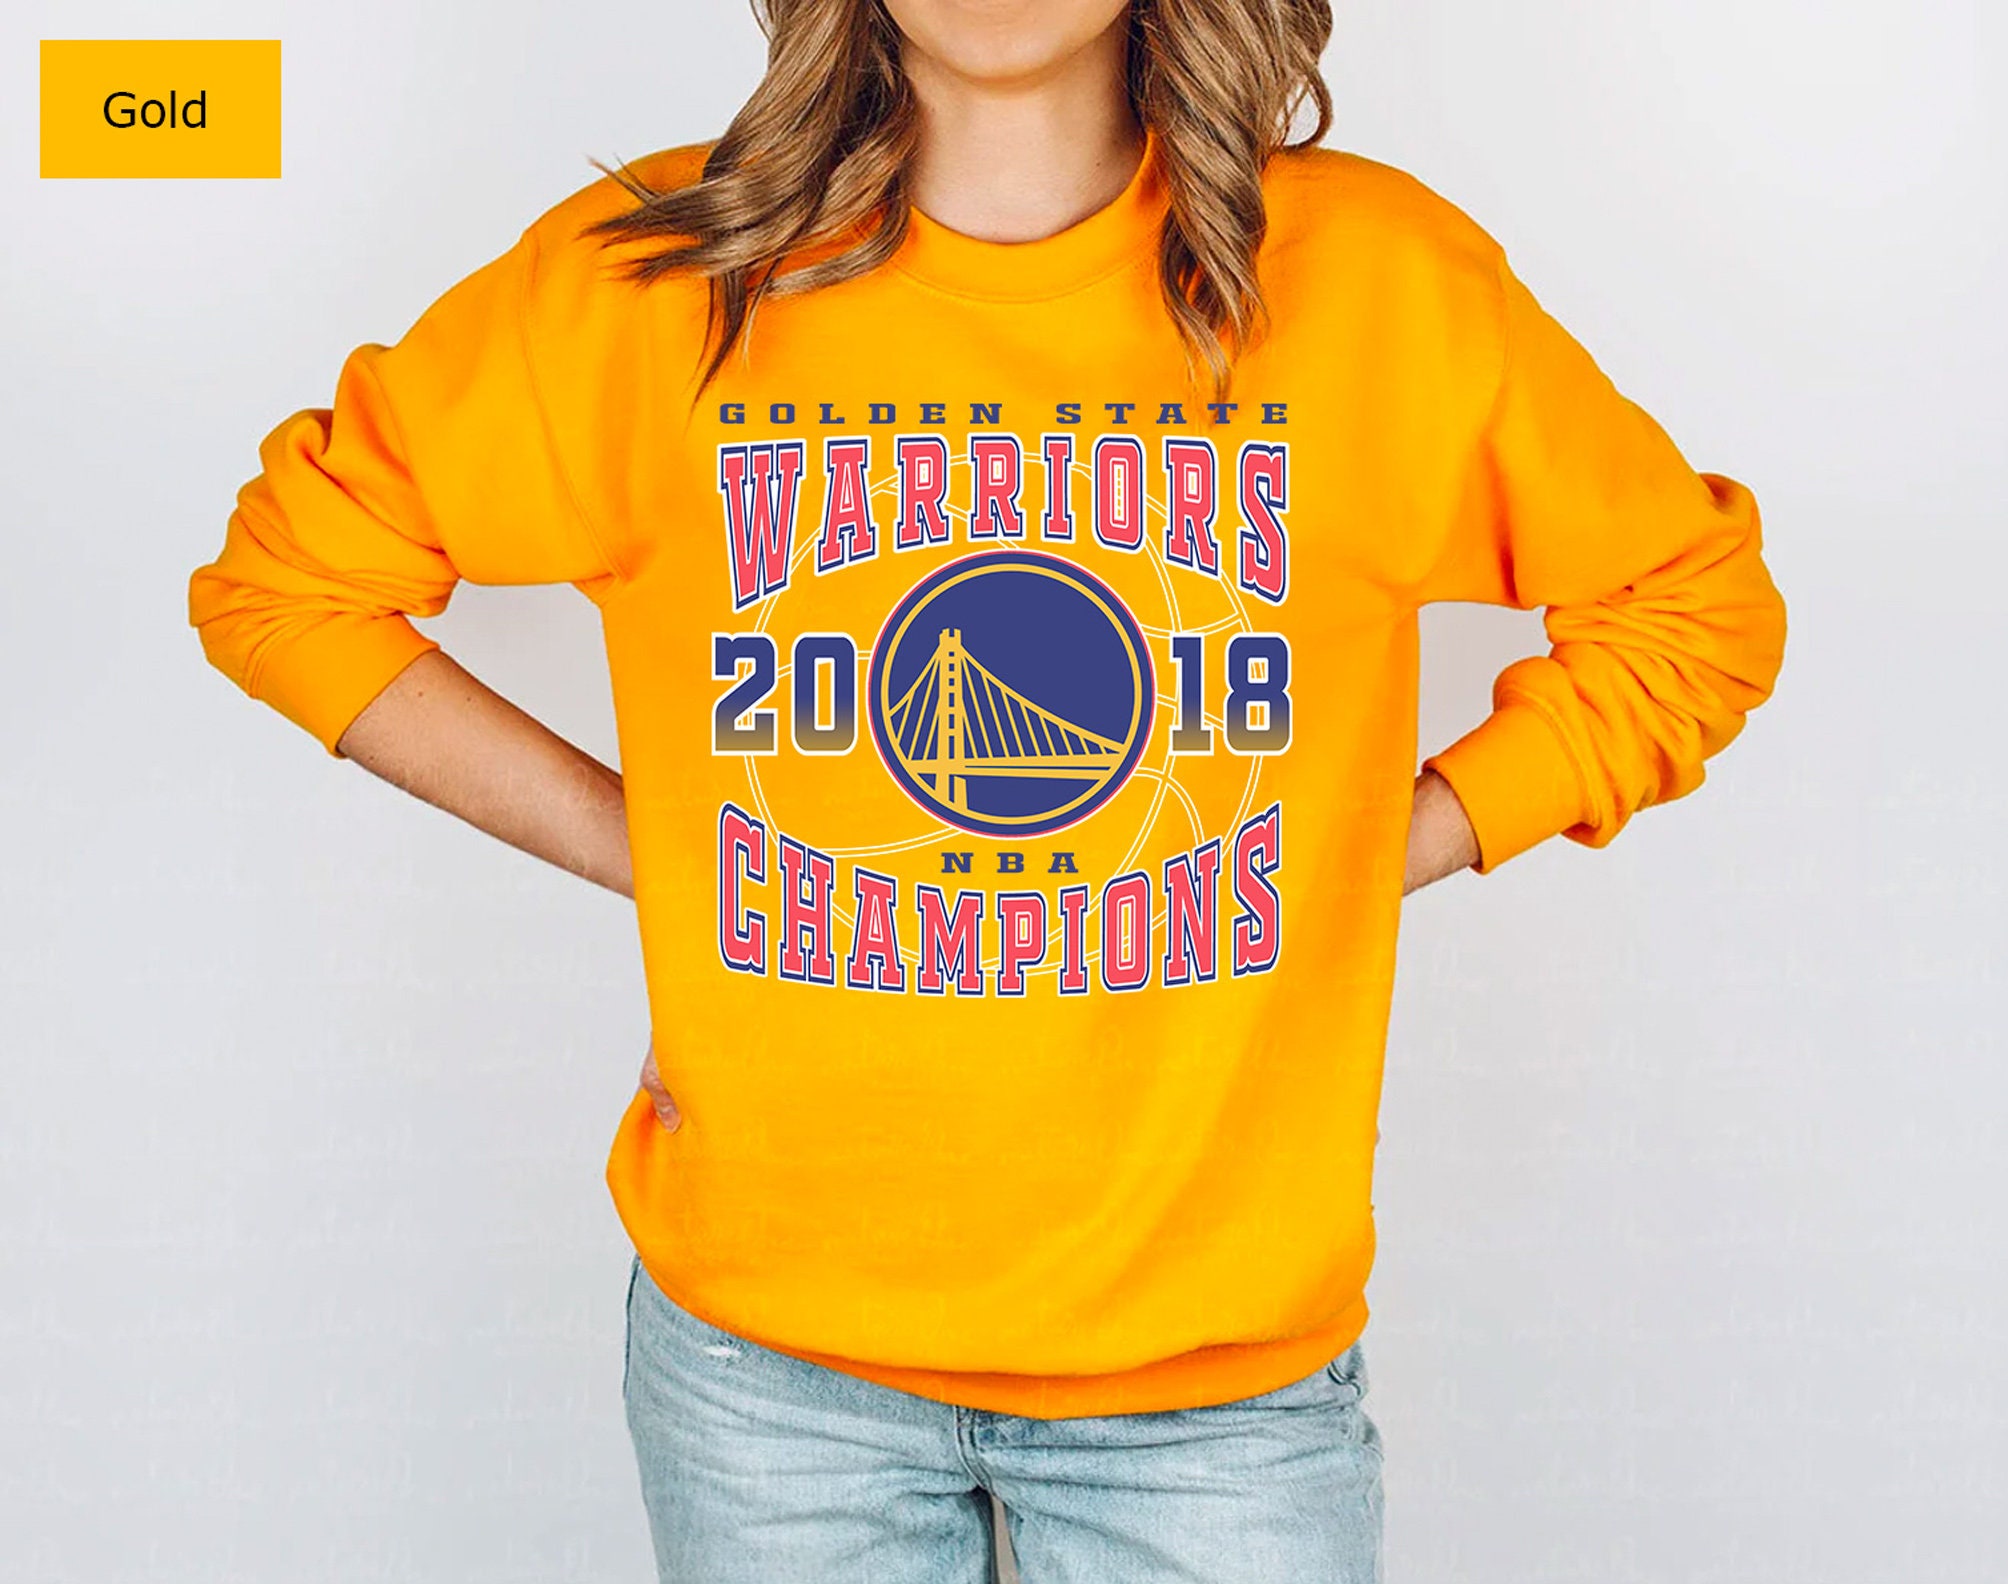 Vintage Style Golden State Warriors 2018 Basketball Unisex Sweatshirt